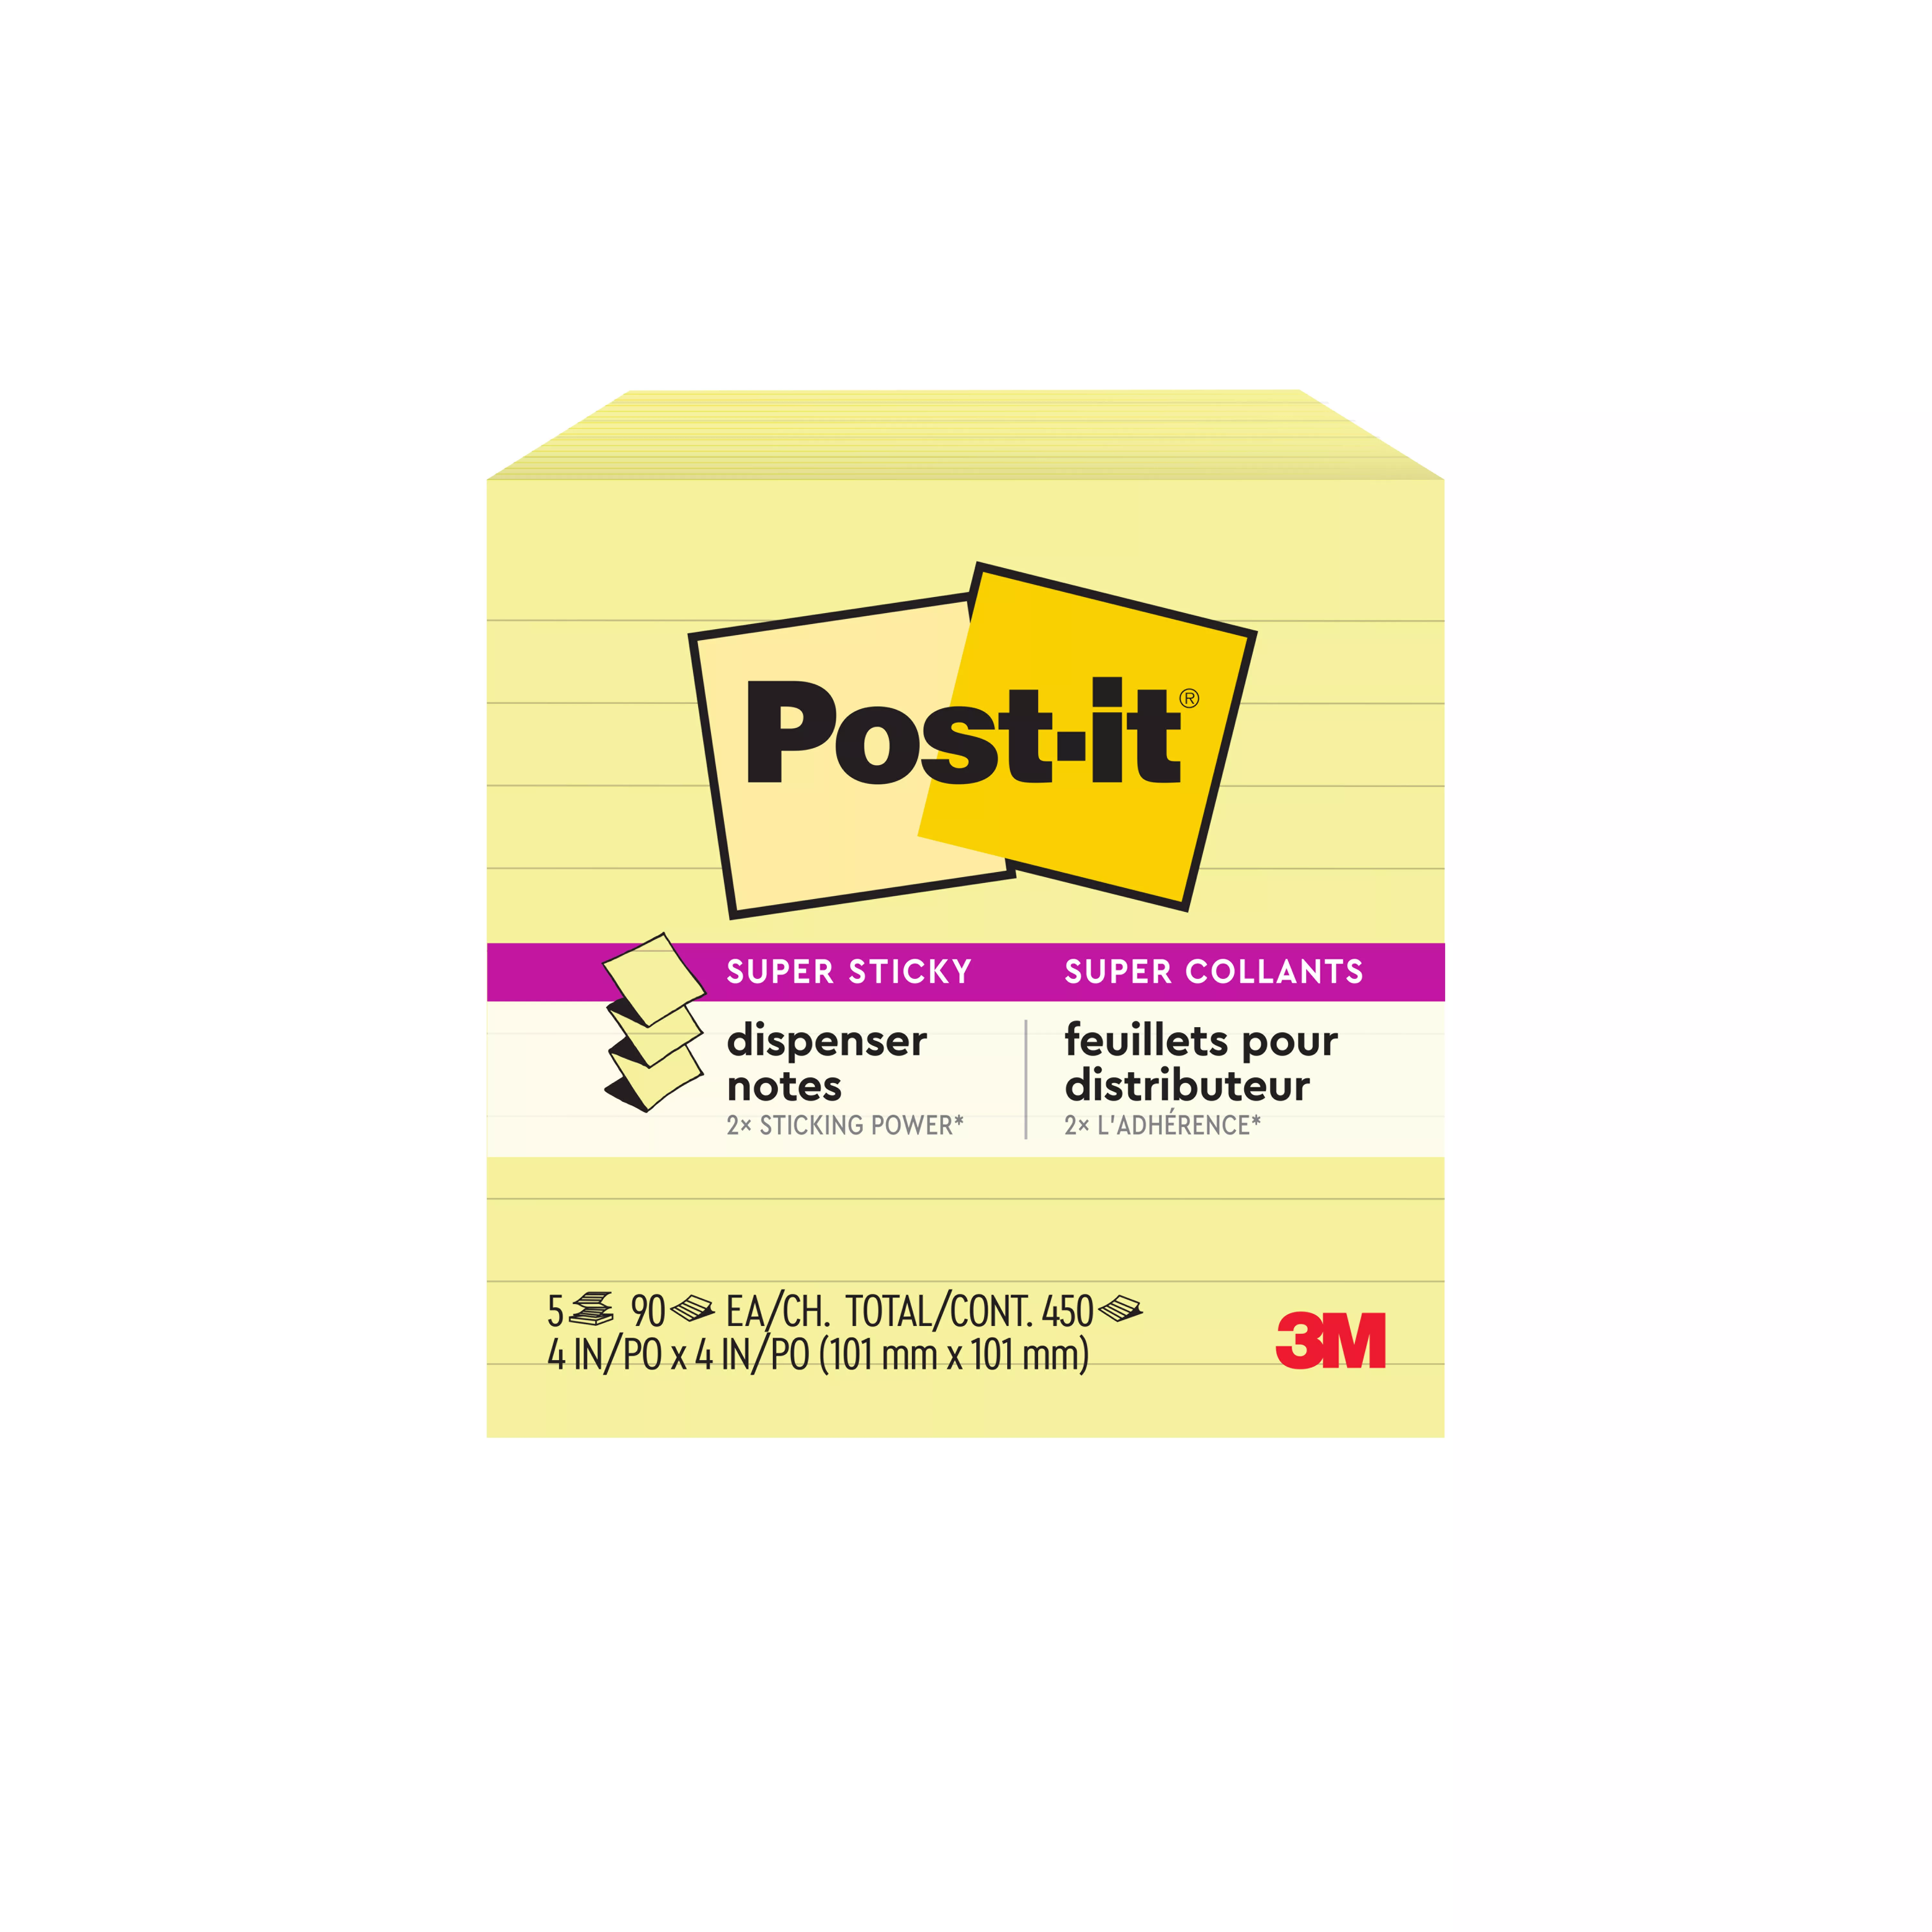 SKU 7100141279 | Post-it® Super Sticky Dispenser Pop-up Notes R440-YWSS